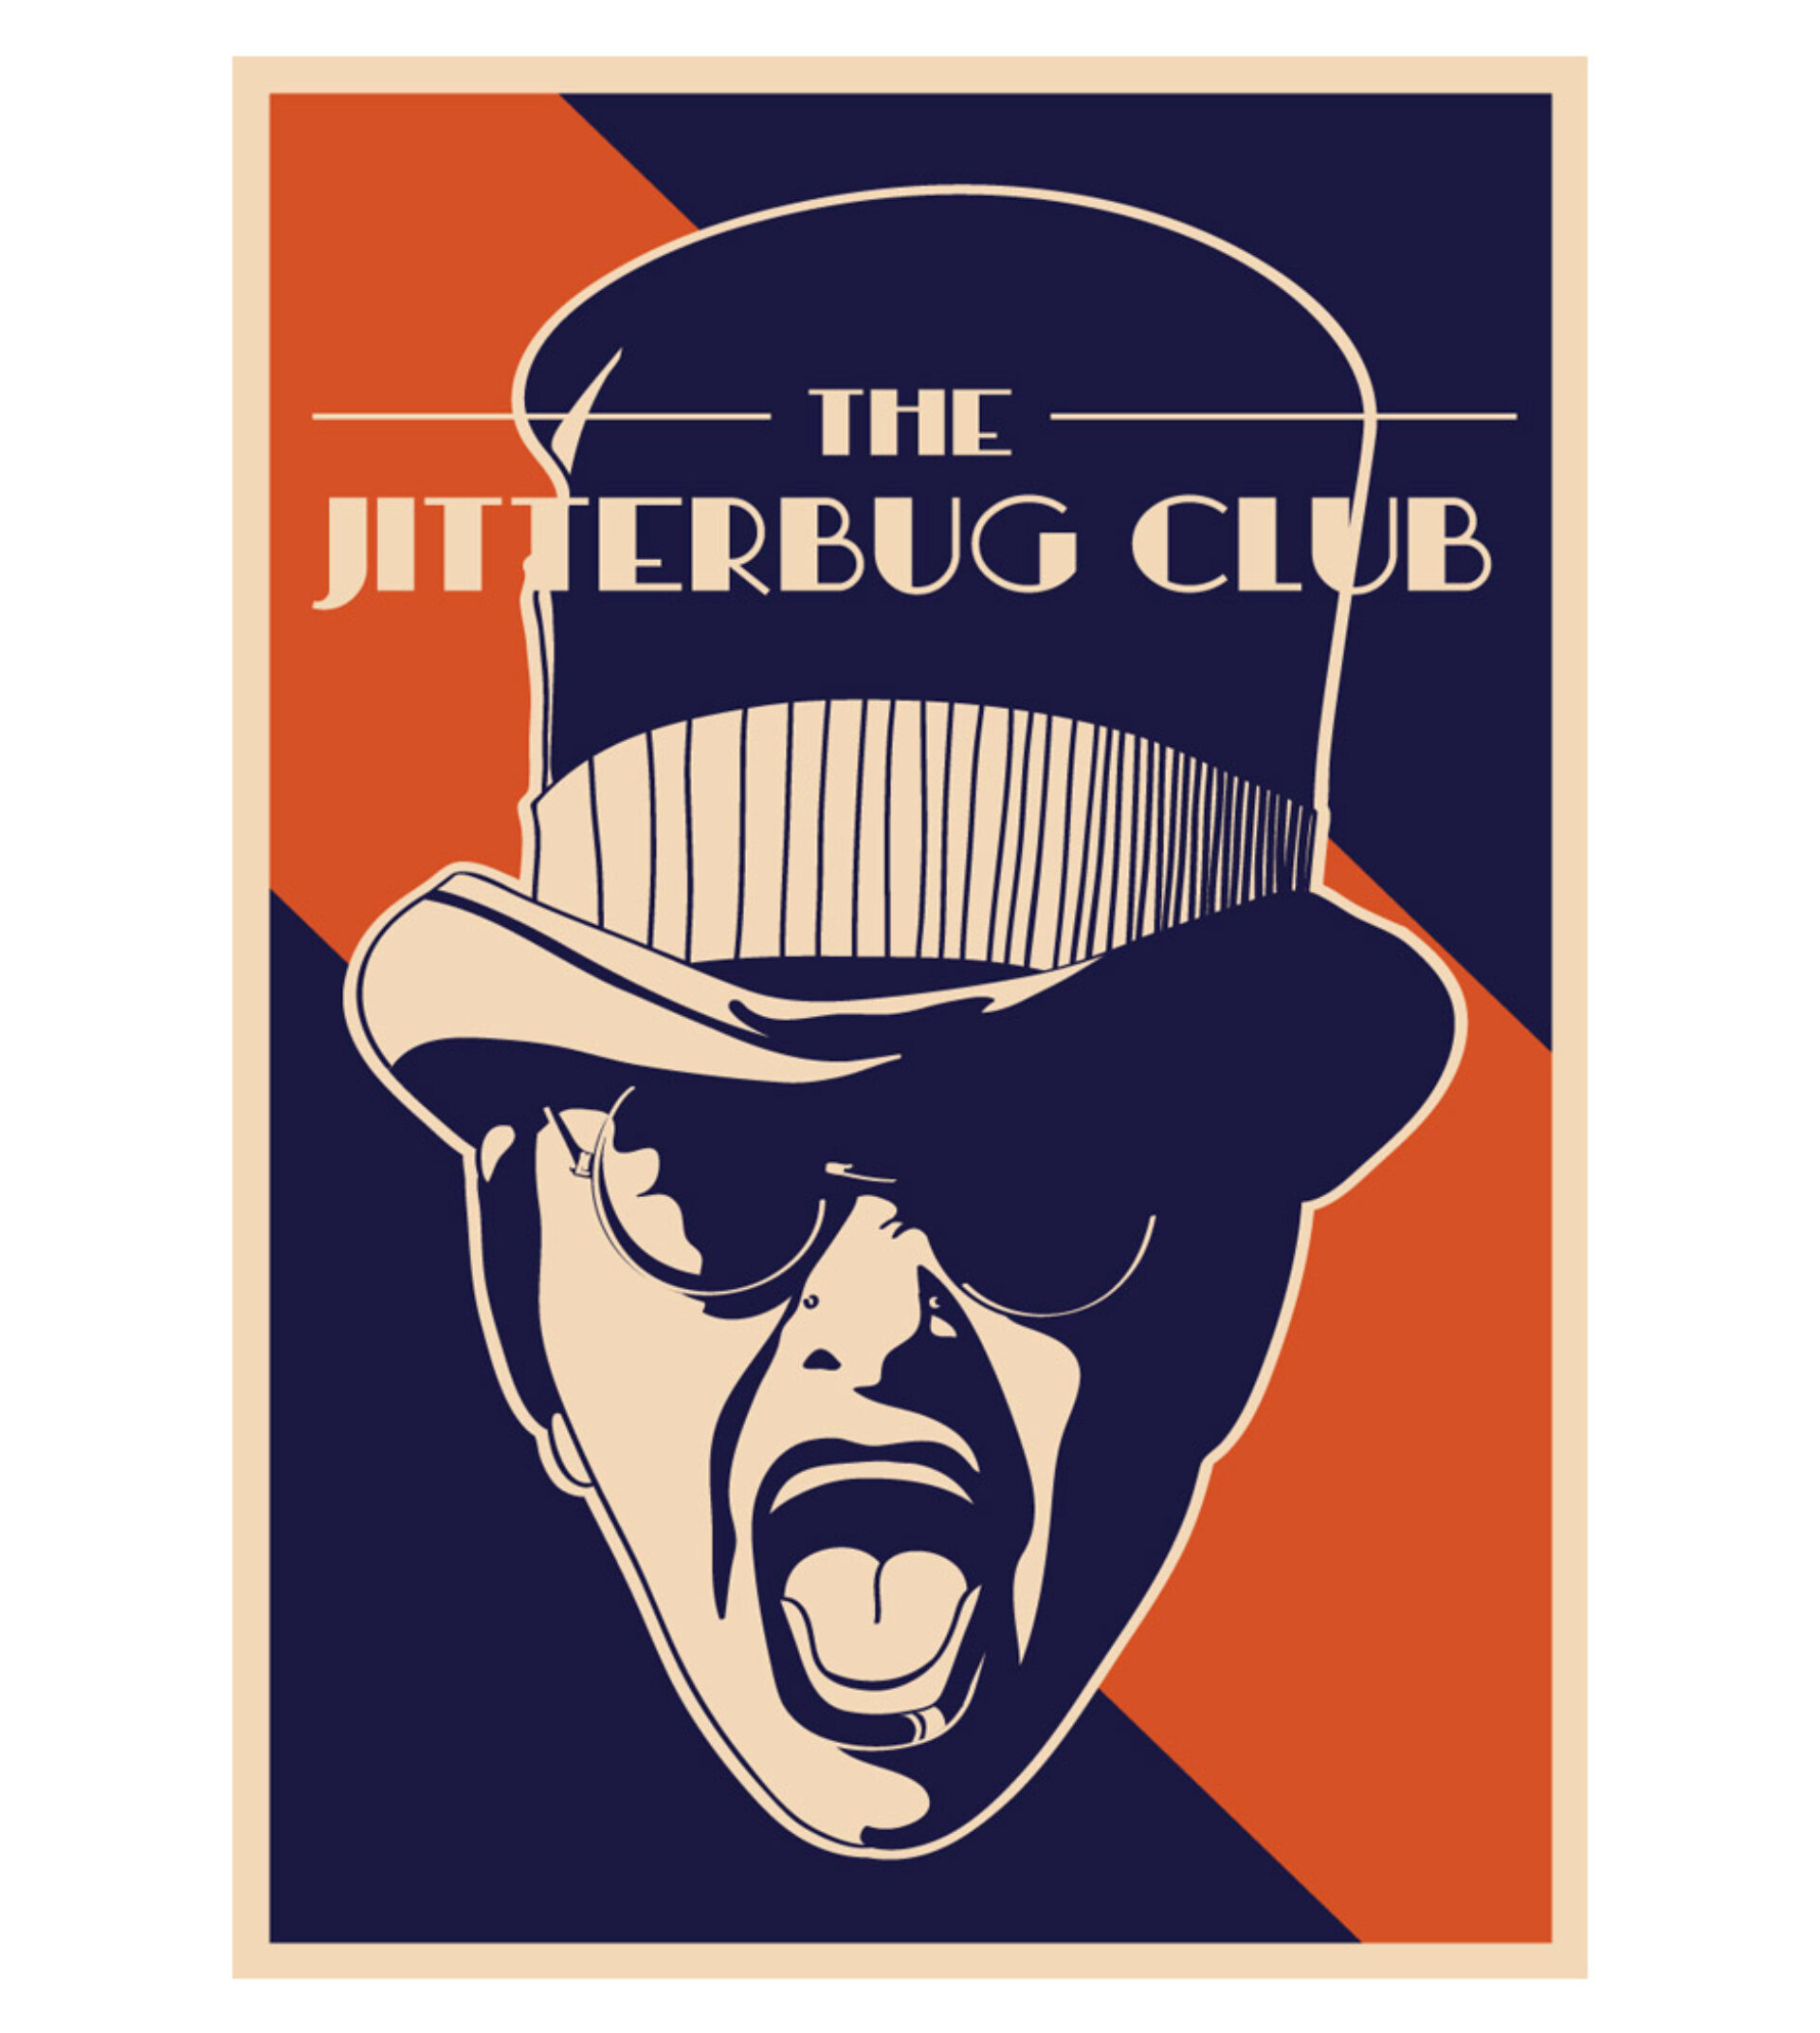 The jitterbug club 03